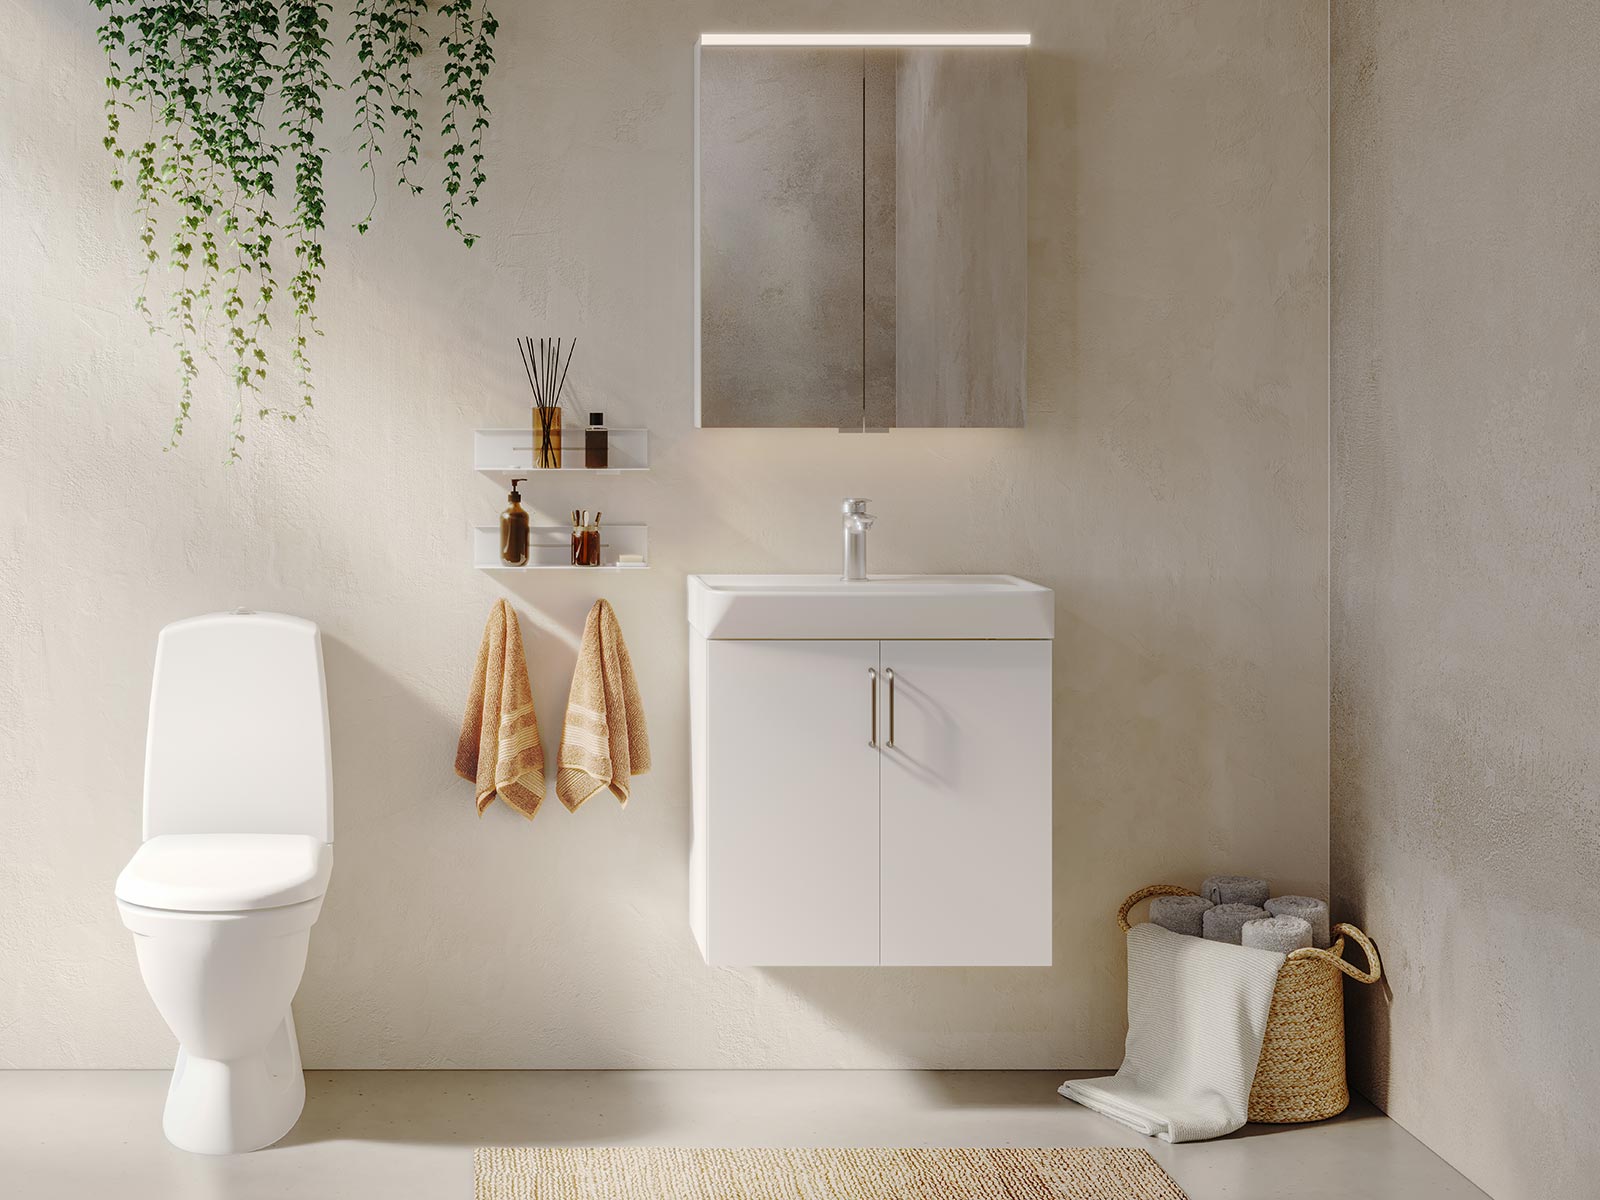 Bloc – a simpler design range for medium-sized and smaller bathrooms.